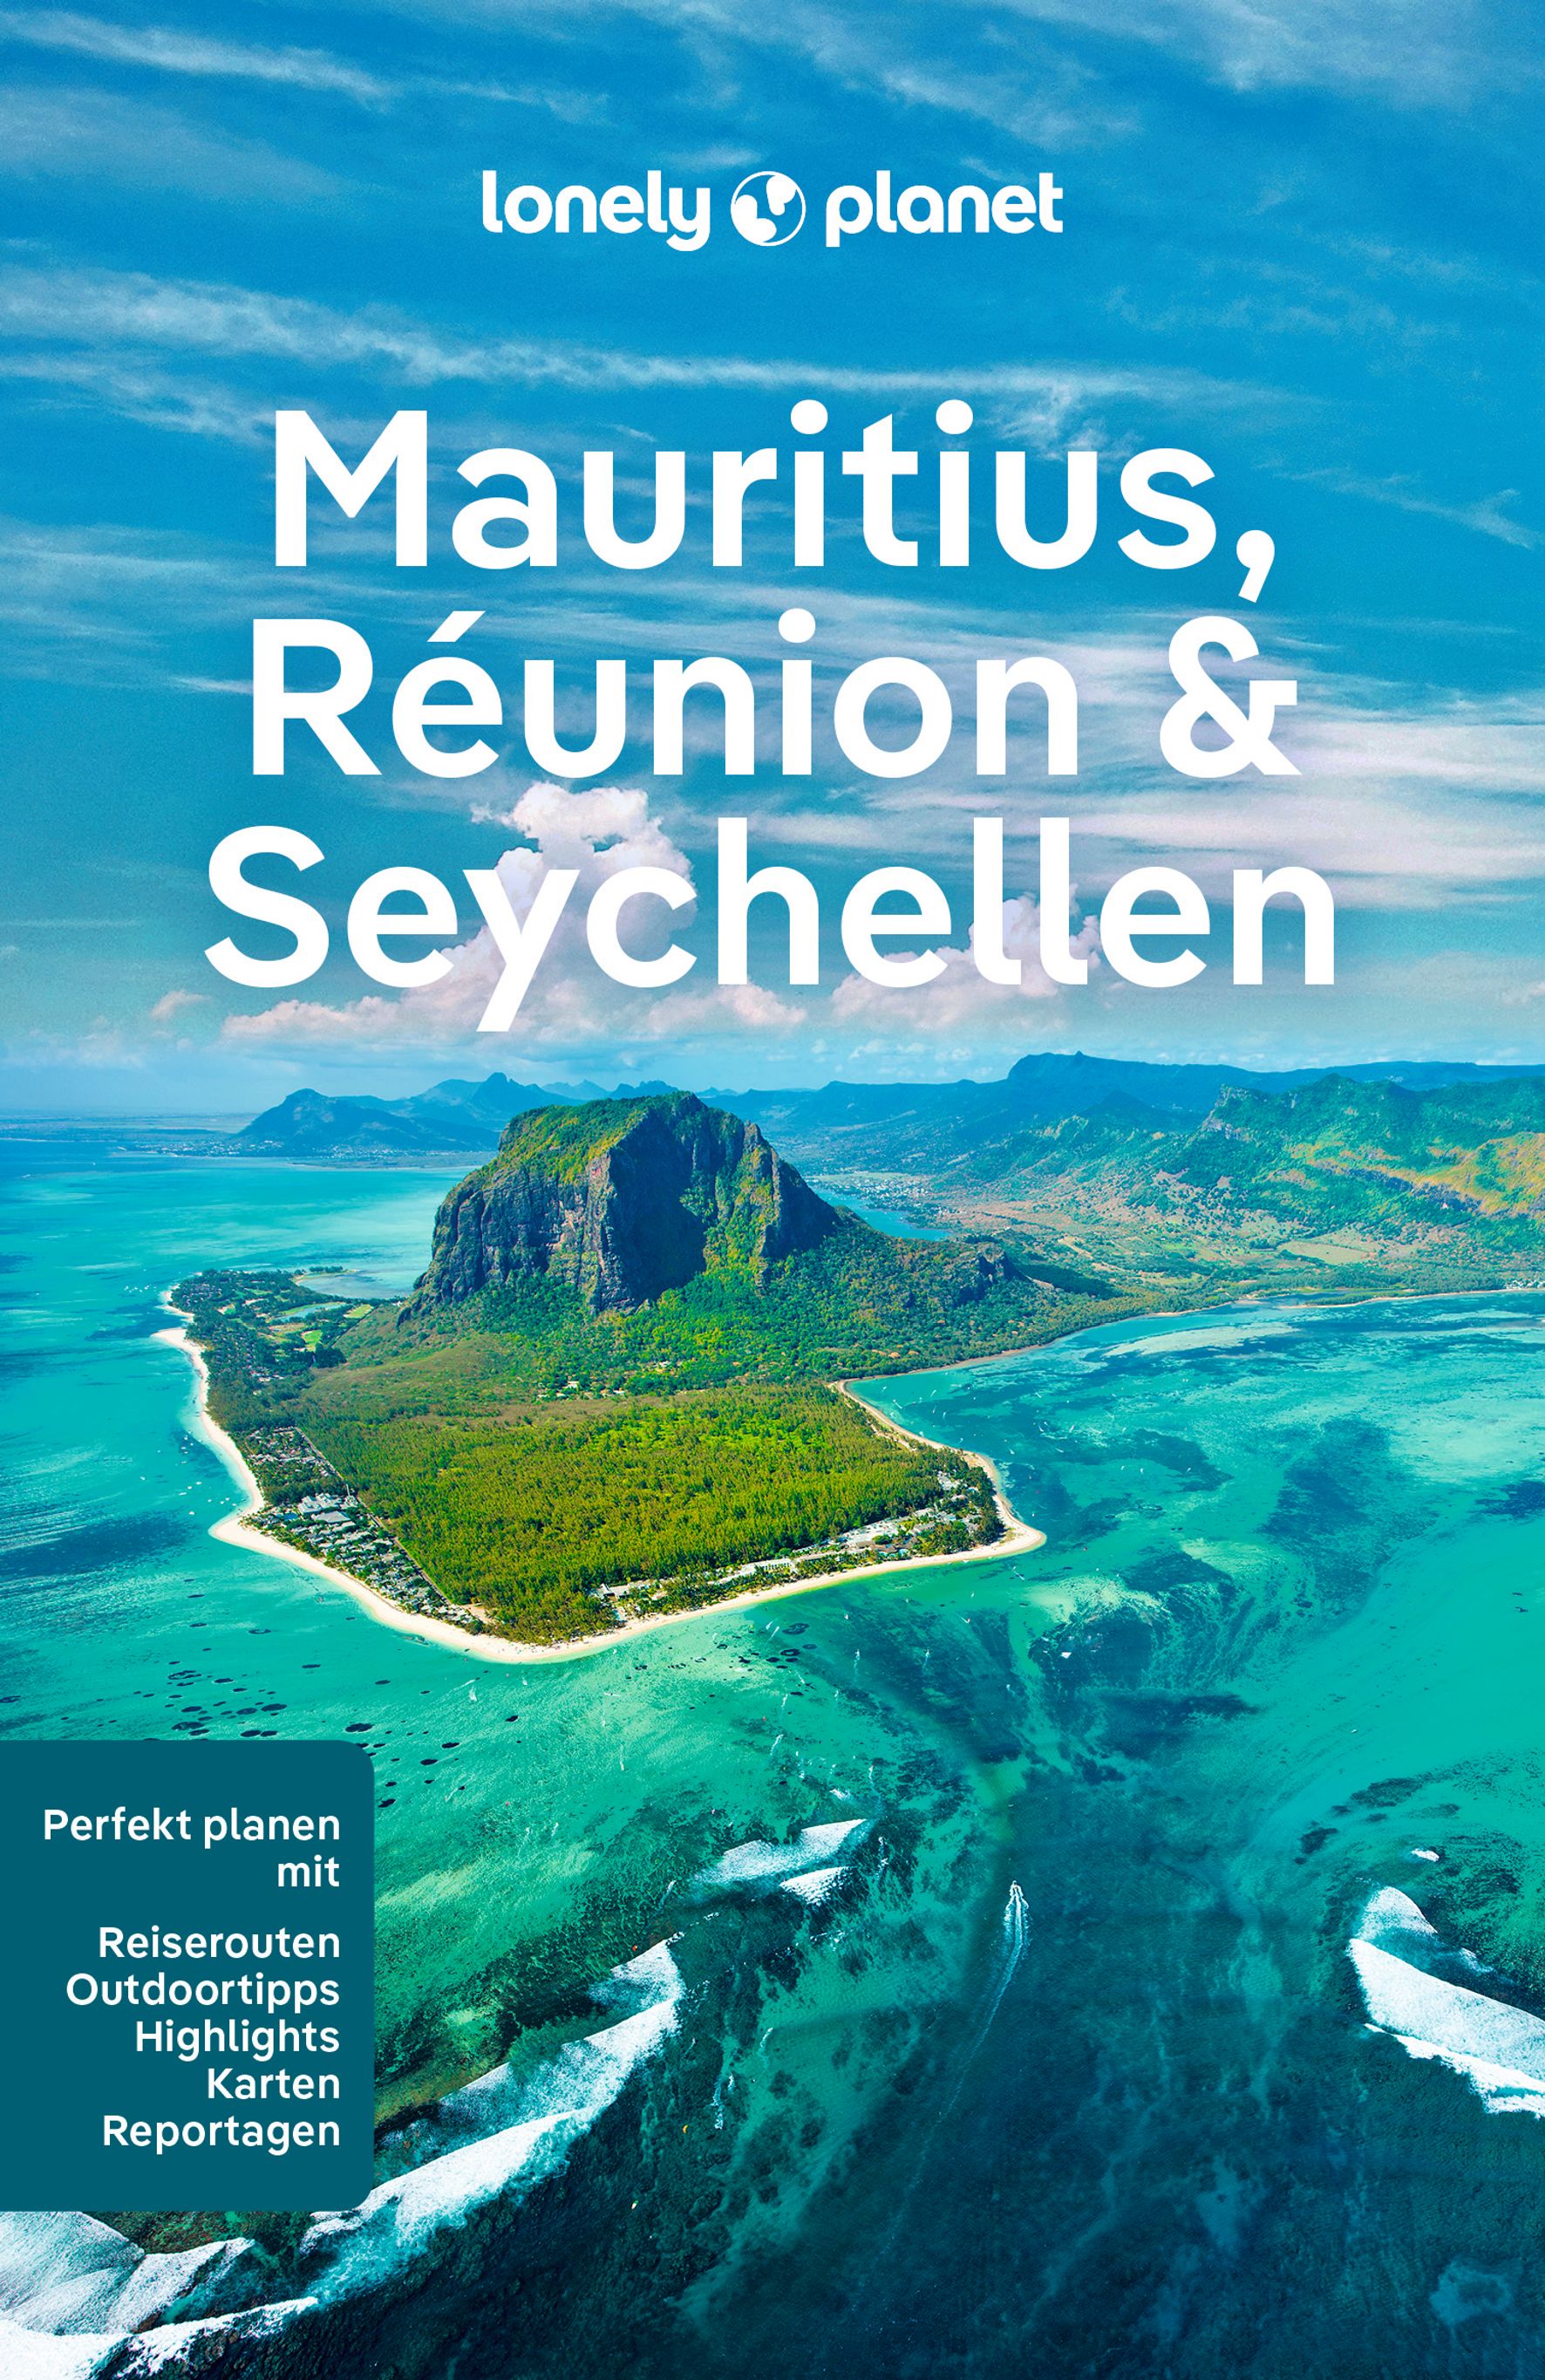 Lonely Planet Mauritius, Reunion & Seychellen